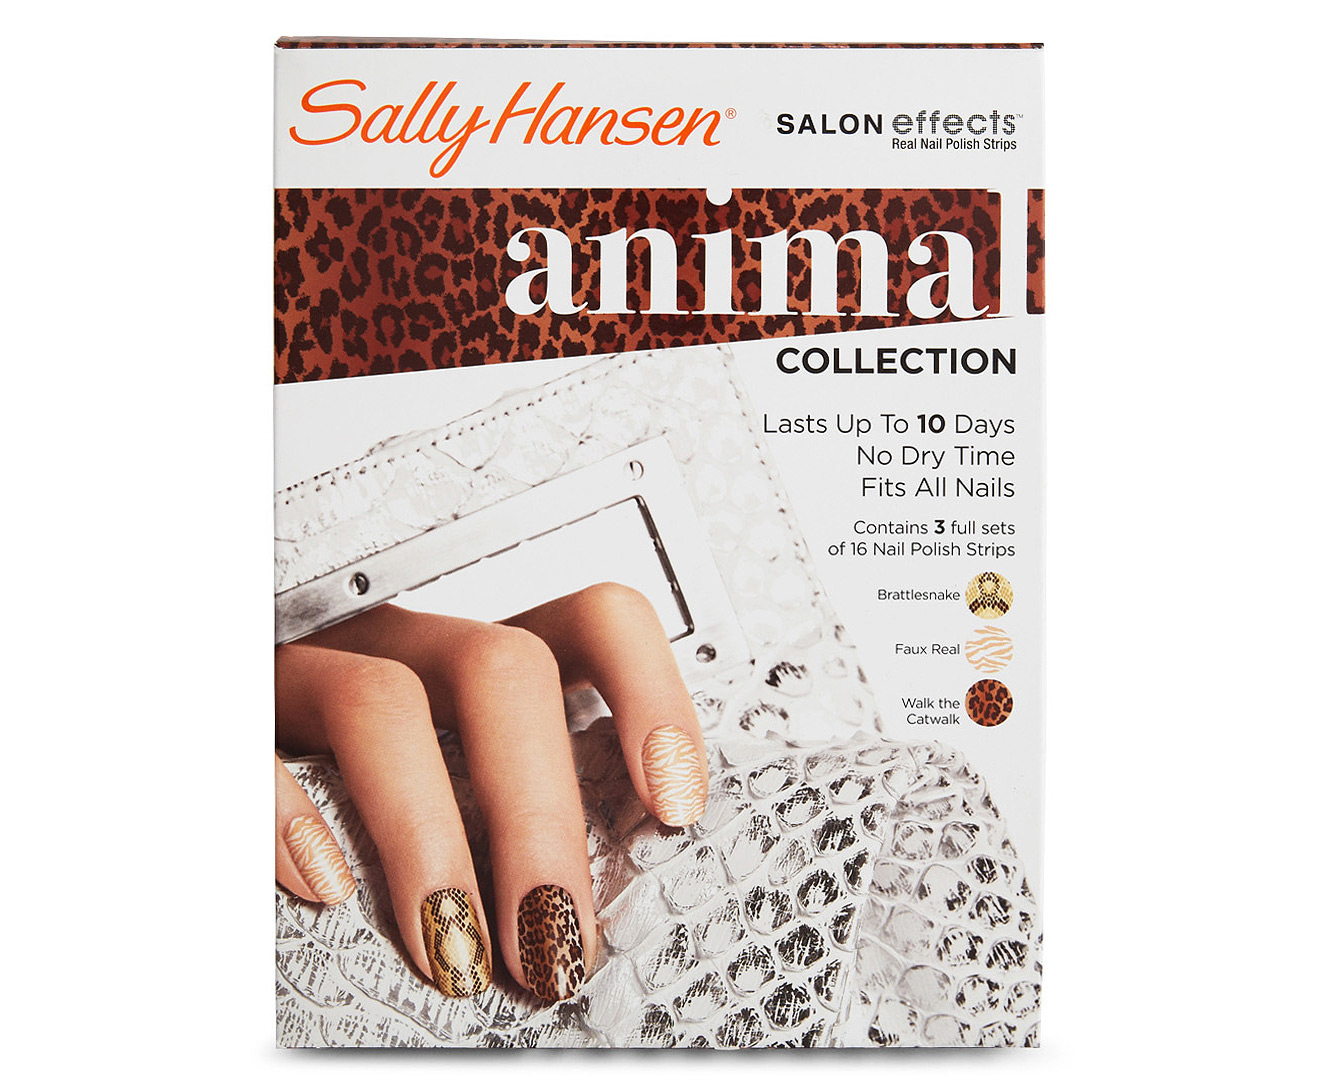 1. Sally Hansen Salon Effects Real Nail Polish Strips - wide 7